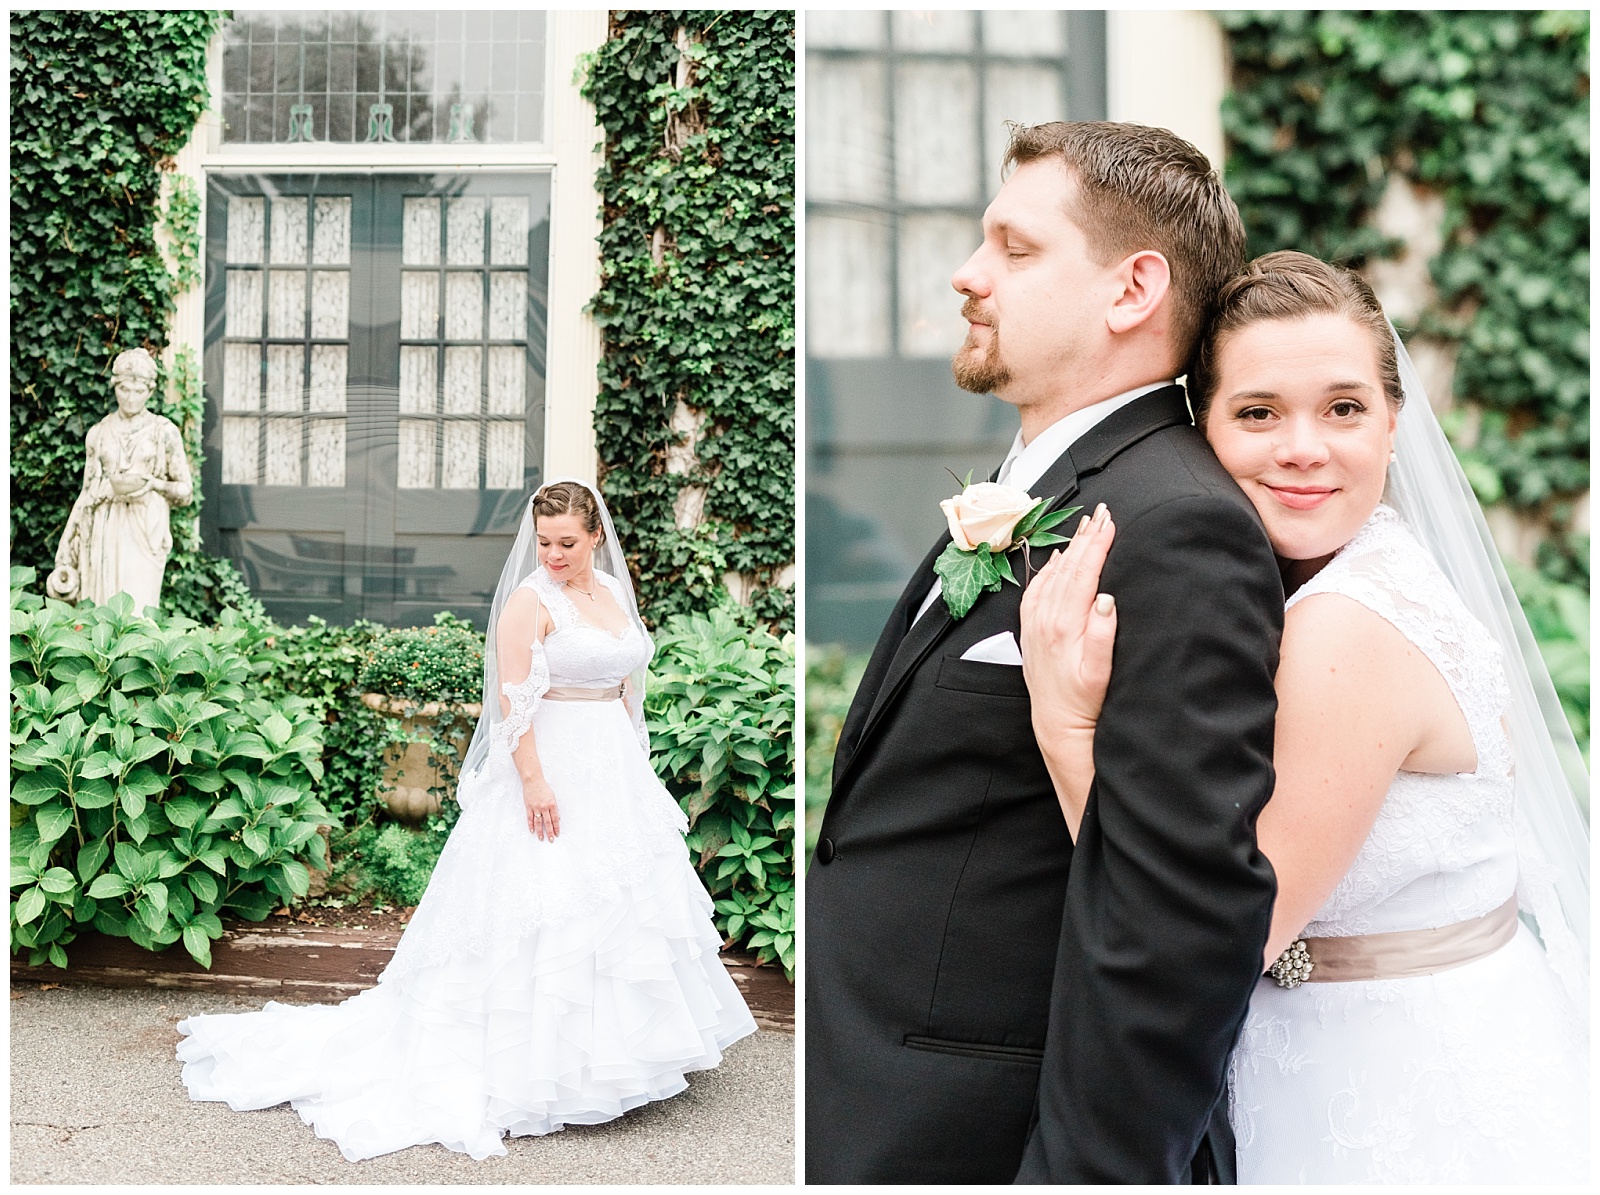 Bride & Groom,David's Country Inn,Elegant,Fall Wedding,Garden,Hackettstown,Ivy,NJ Wedding Photographer,